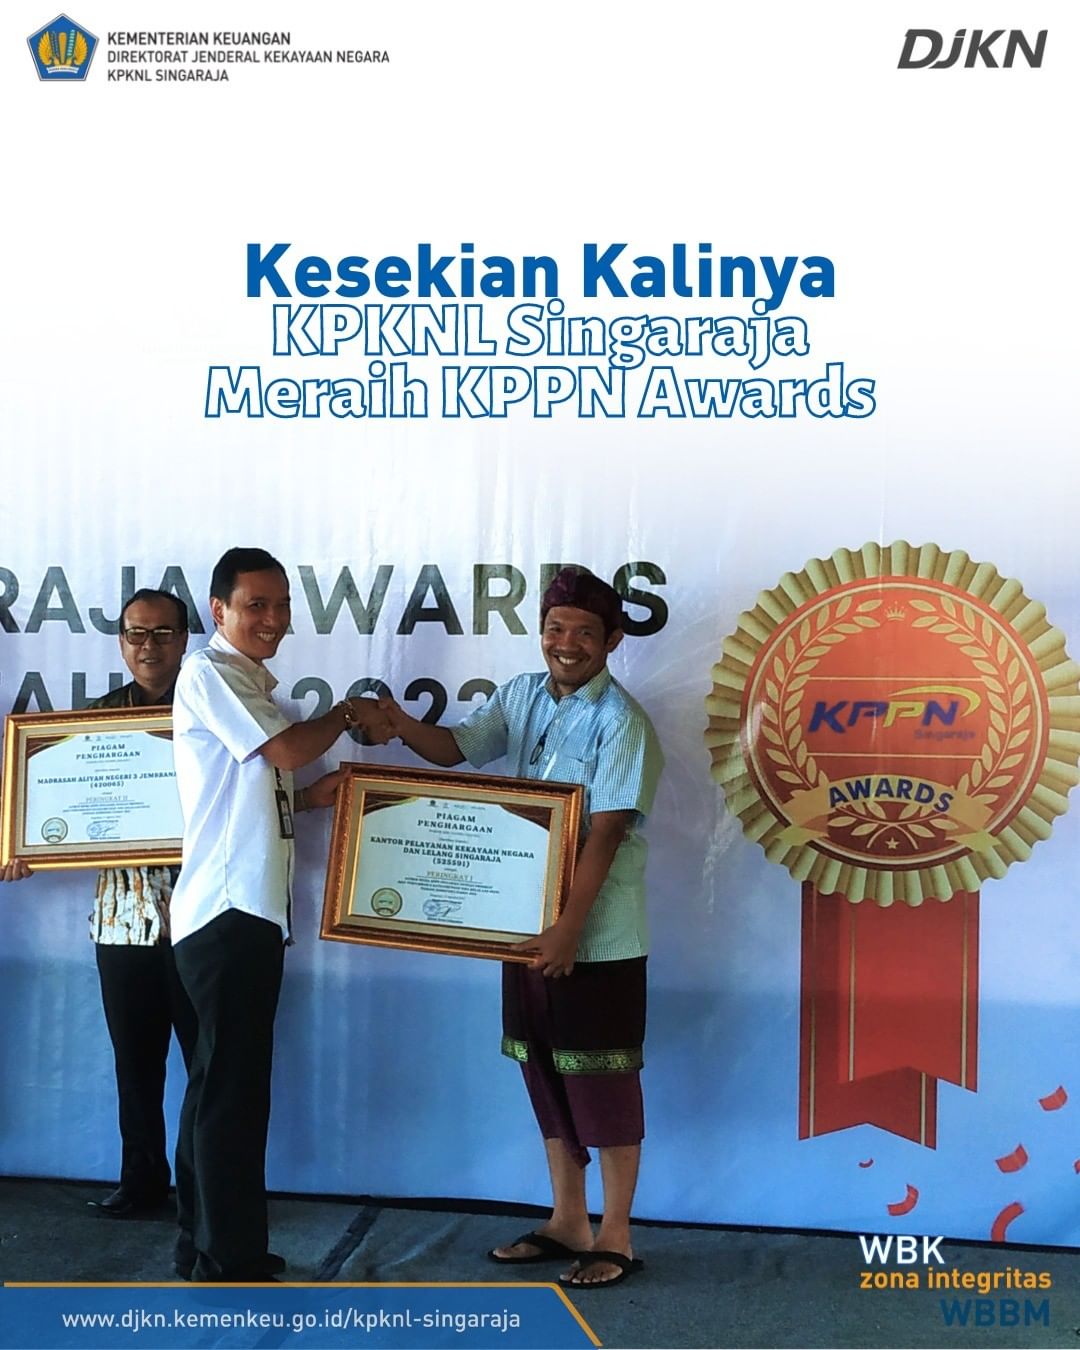 KPKNL Singaraja Torehkan Dua Prestasi pada Ajang KPPN Singaraja Awards